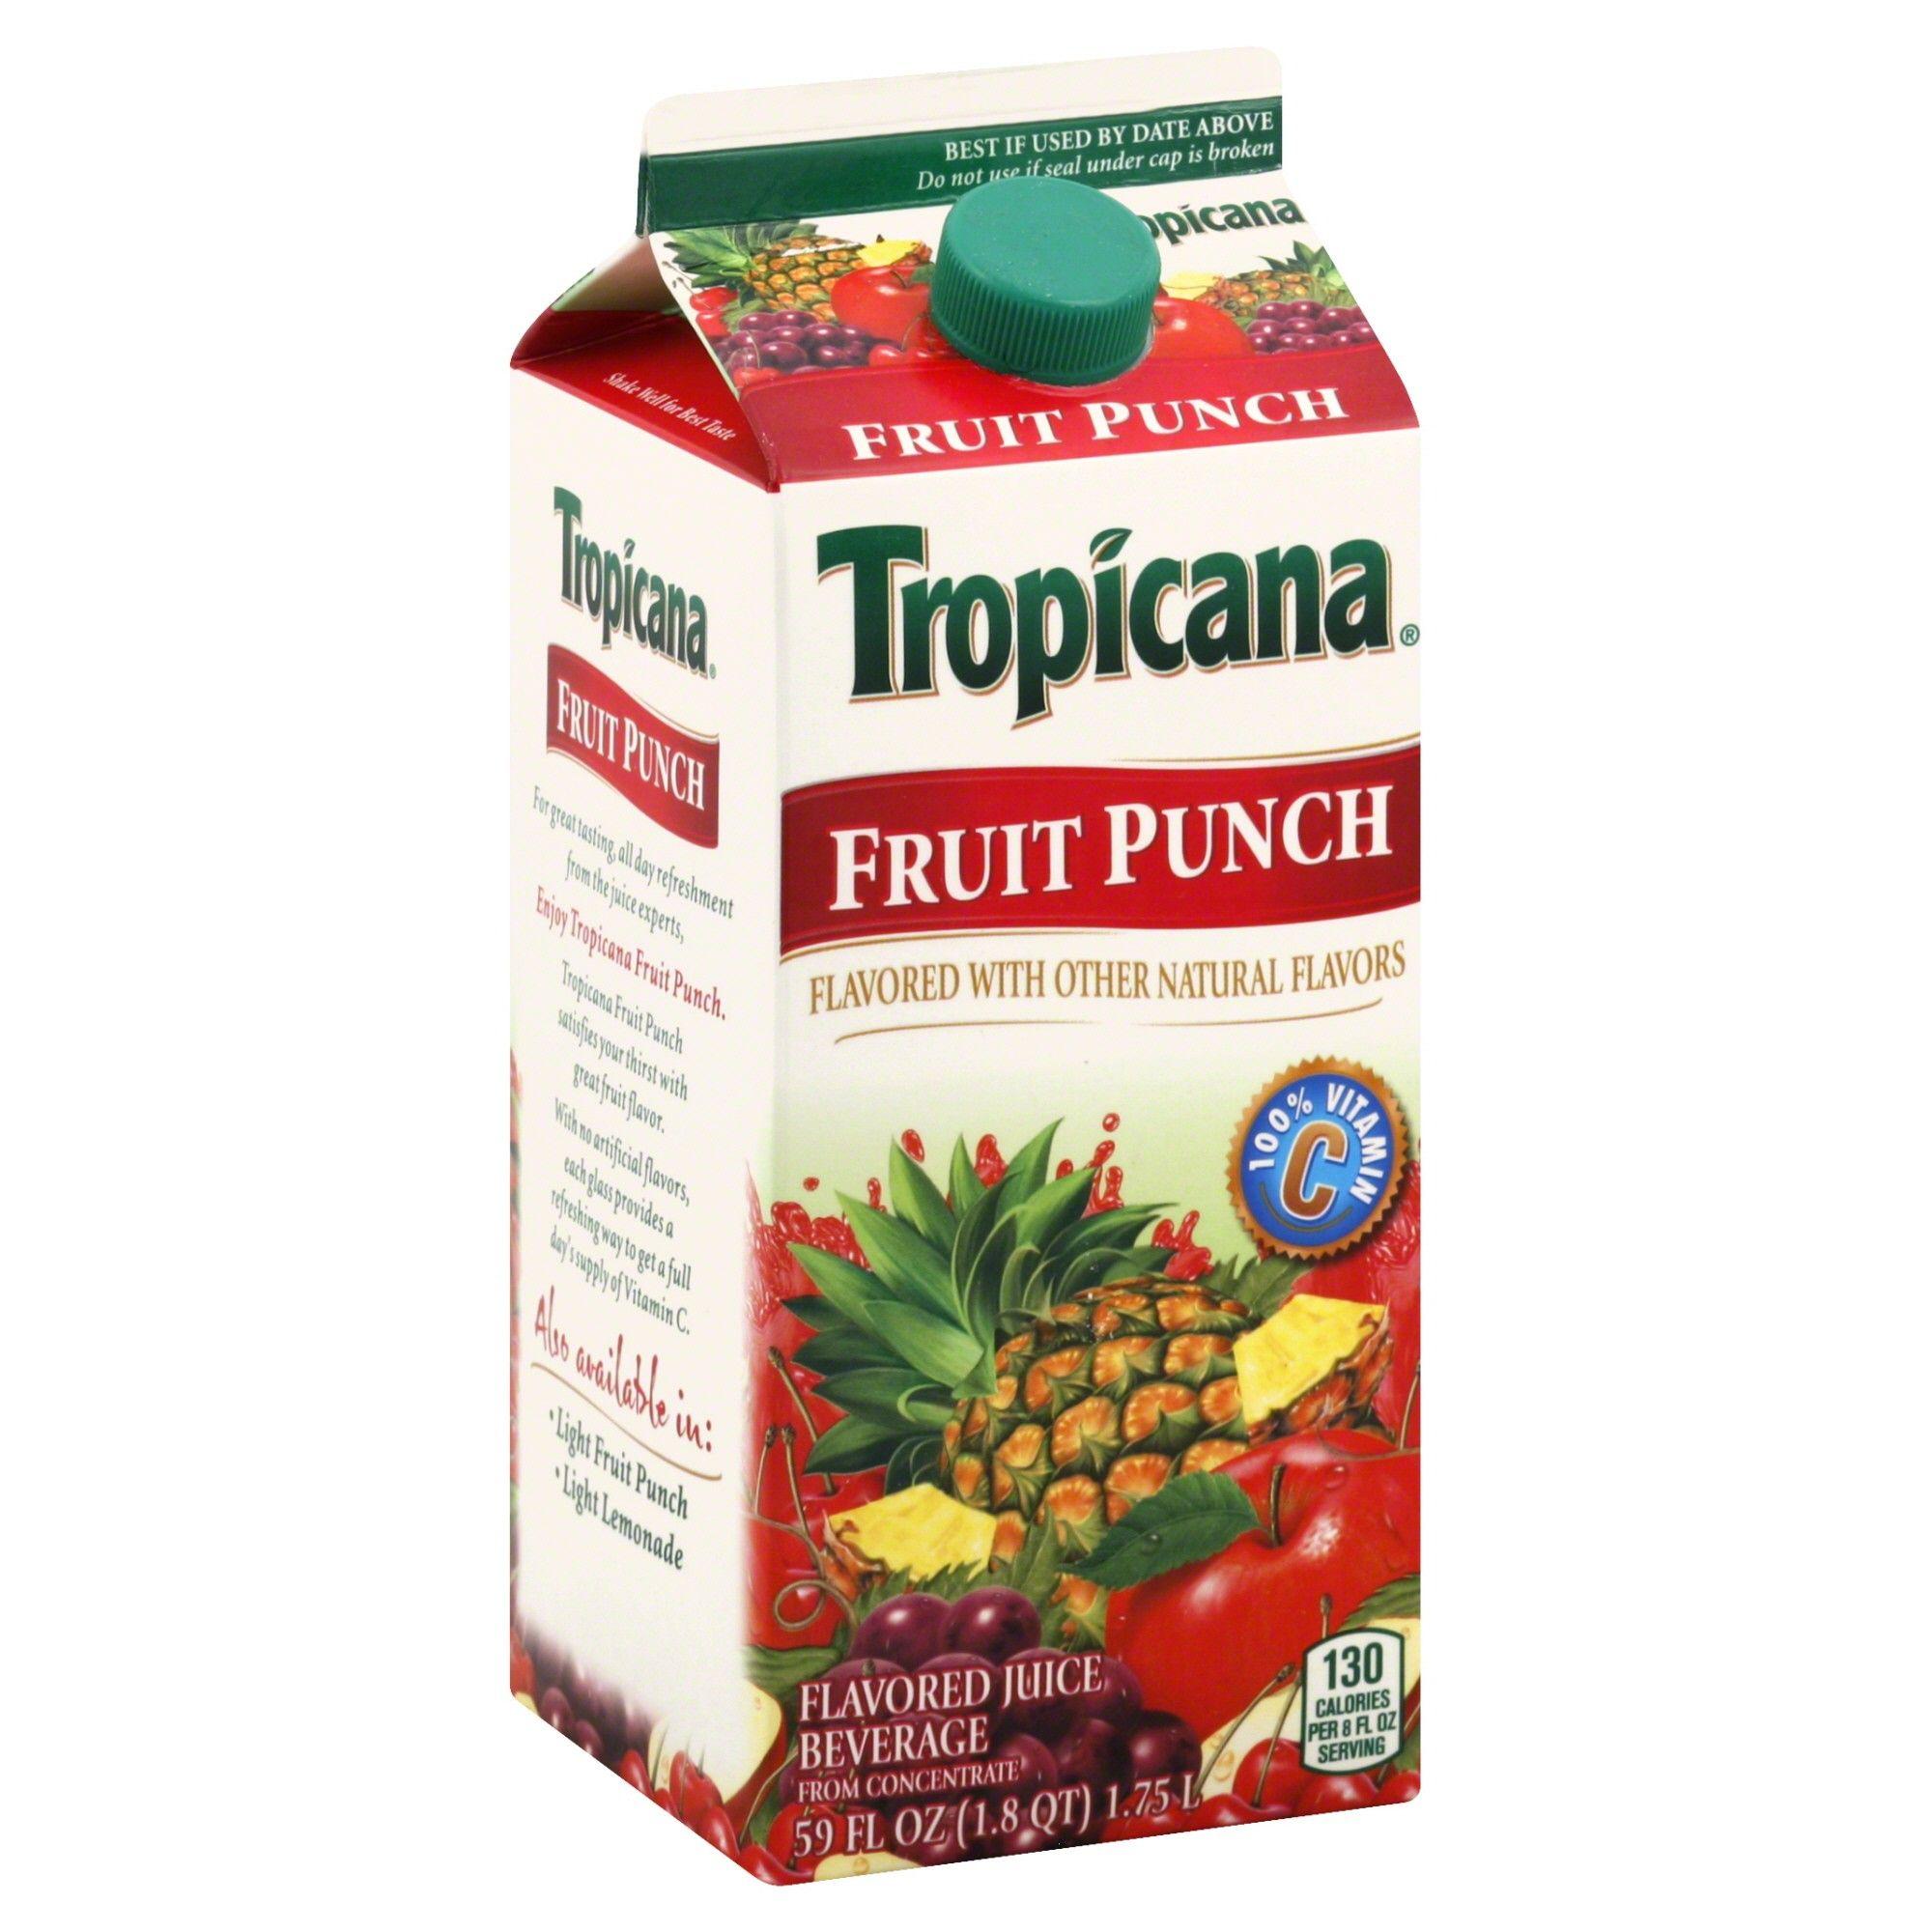 Tropicana Fruit Punch Logo - Tropicana Juice Beverage, Fruit Punch 59 fl oz (1.8 qt) 1.75 lt